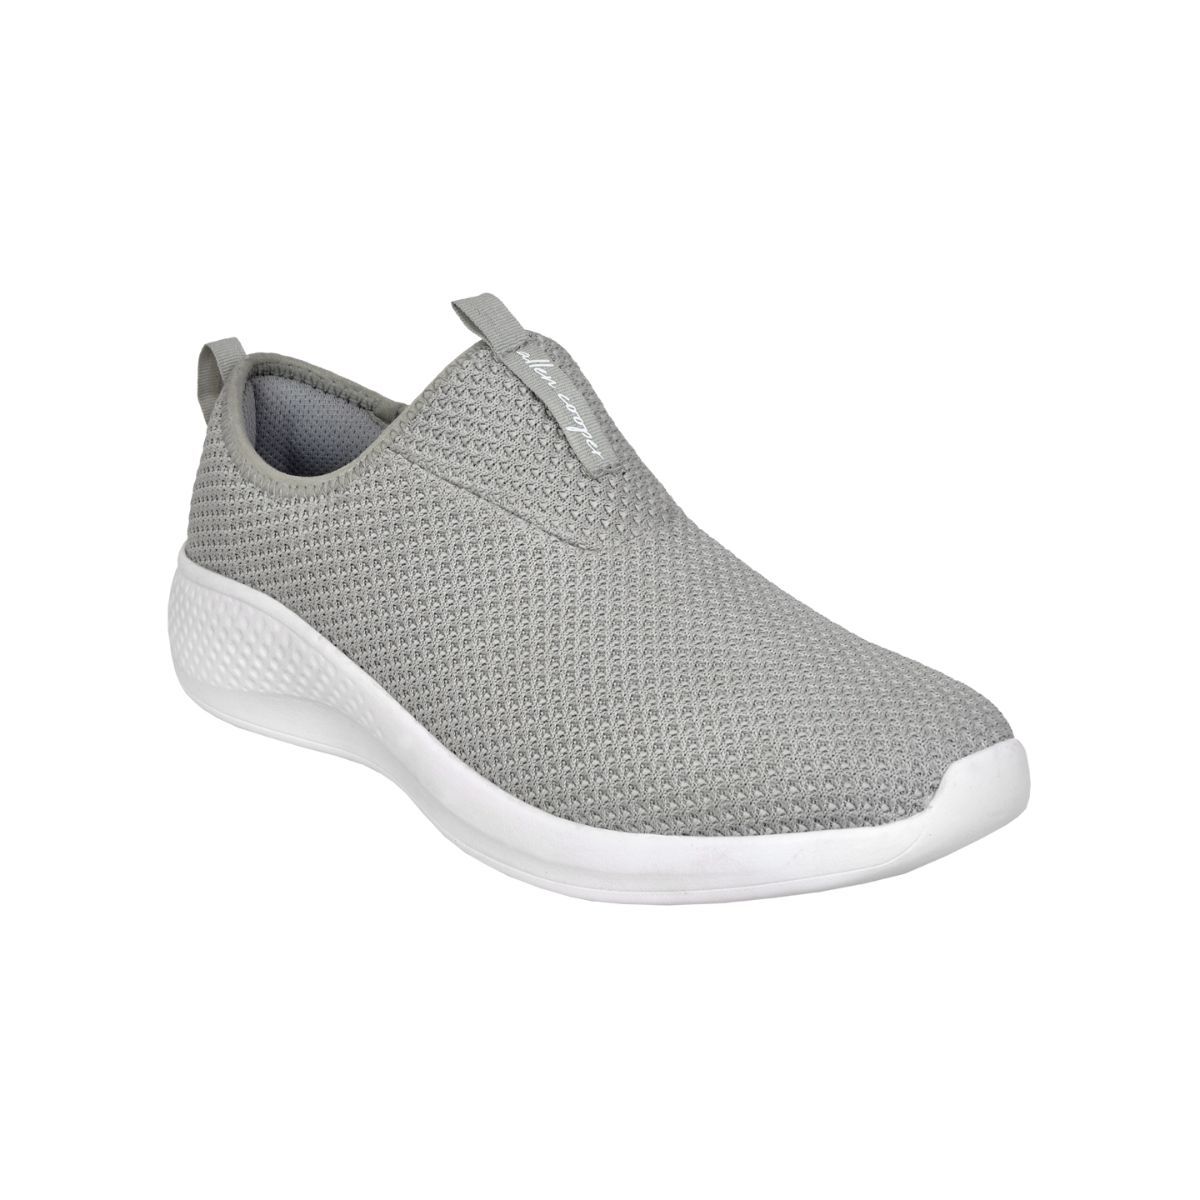 Allen Cooper Grey Sports Shoes For Men - 7